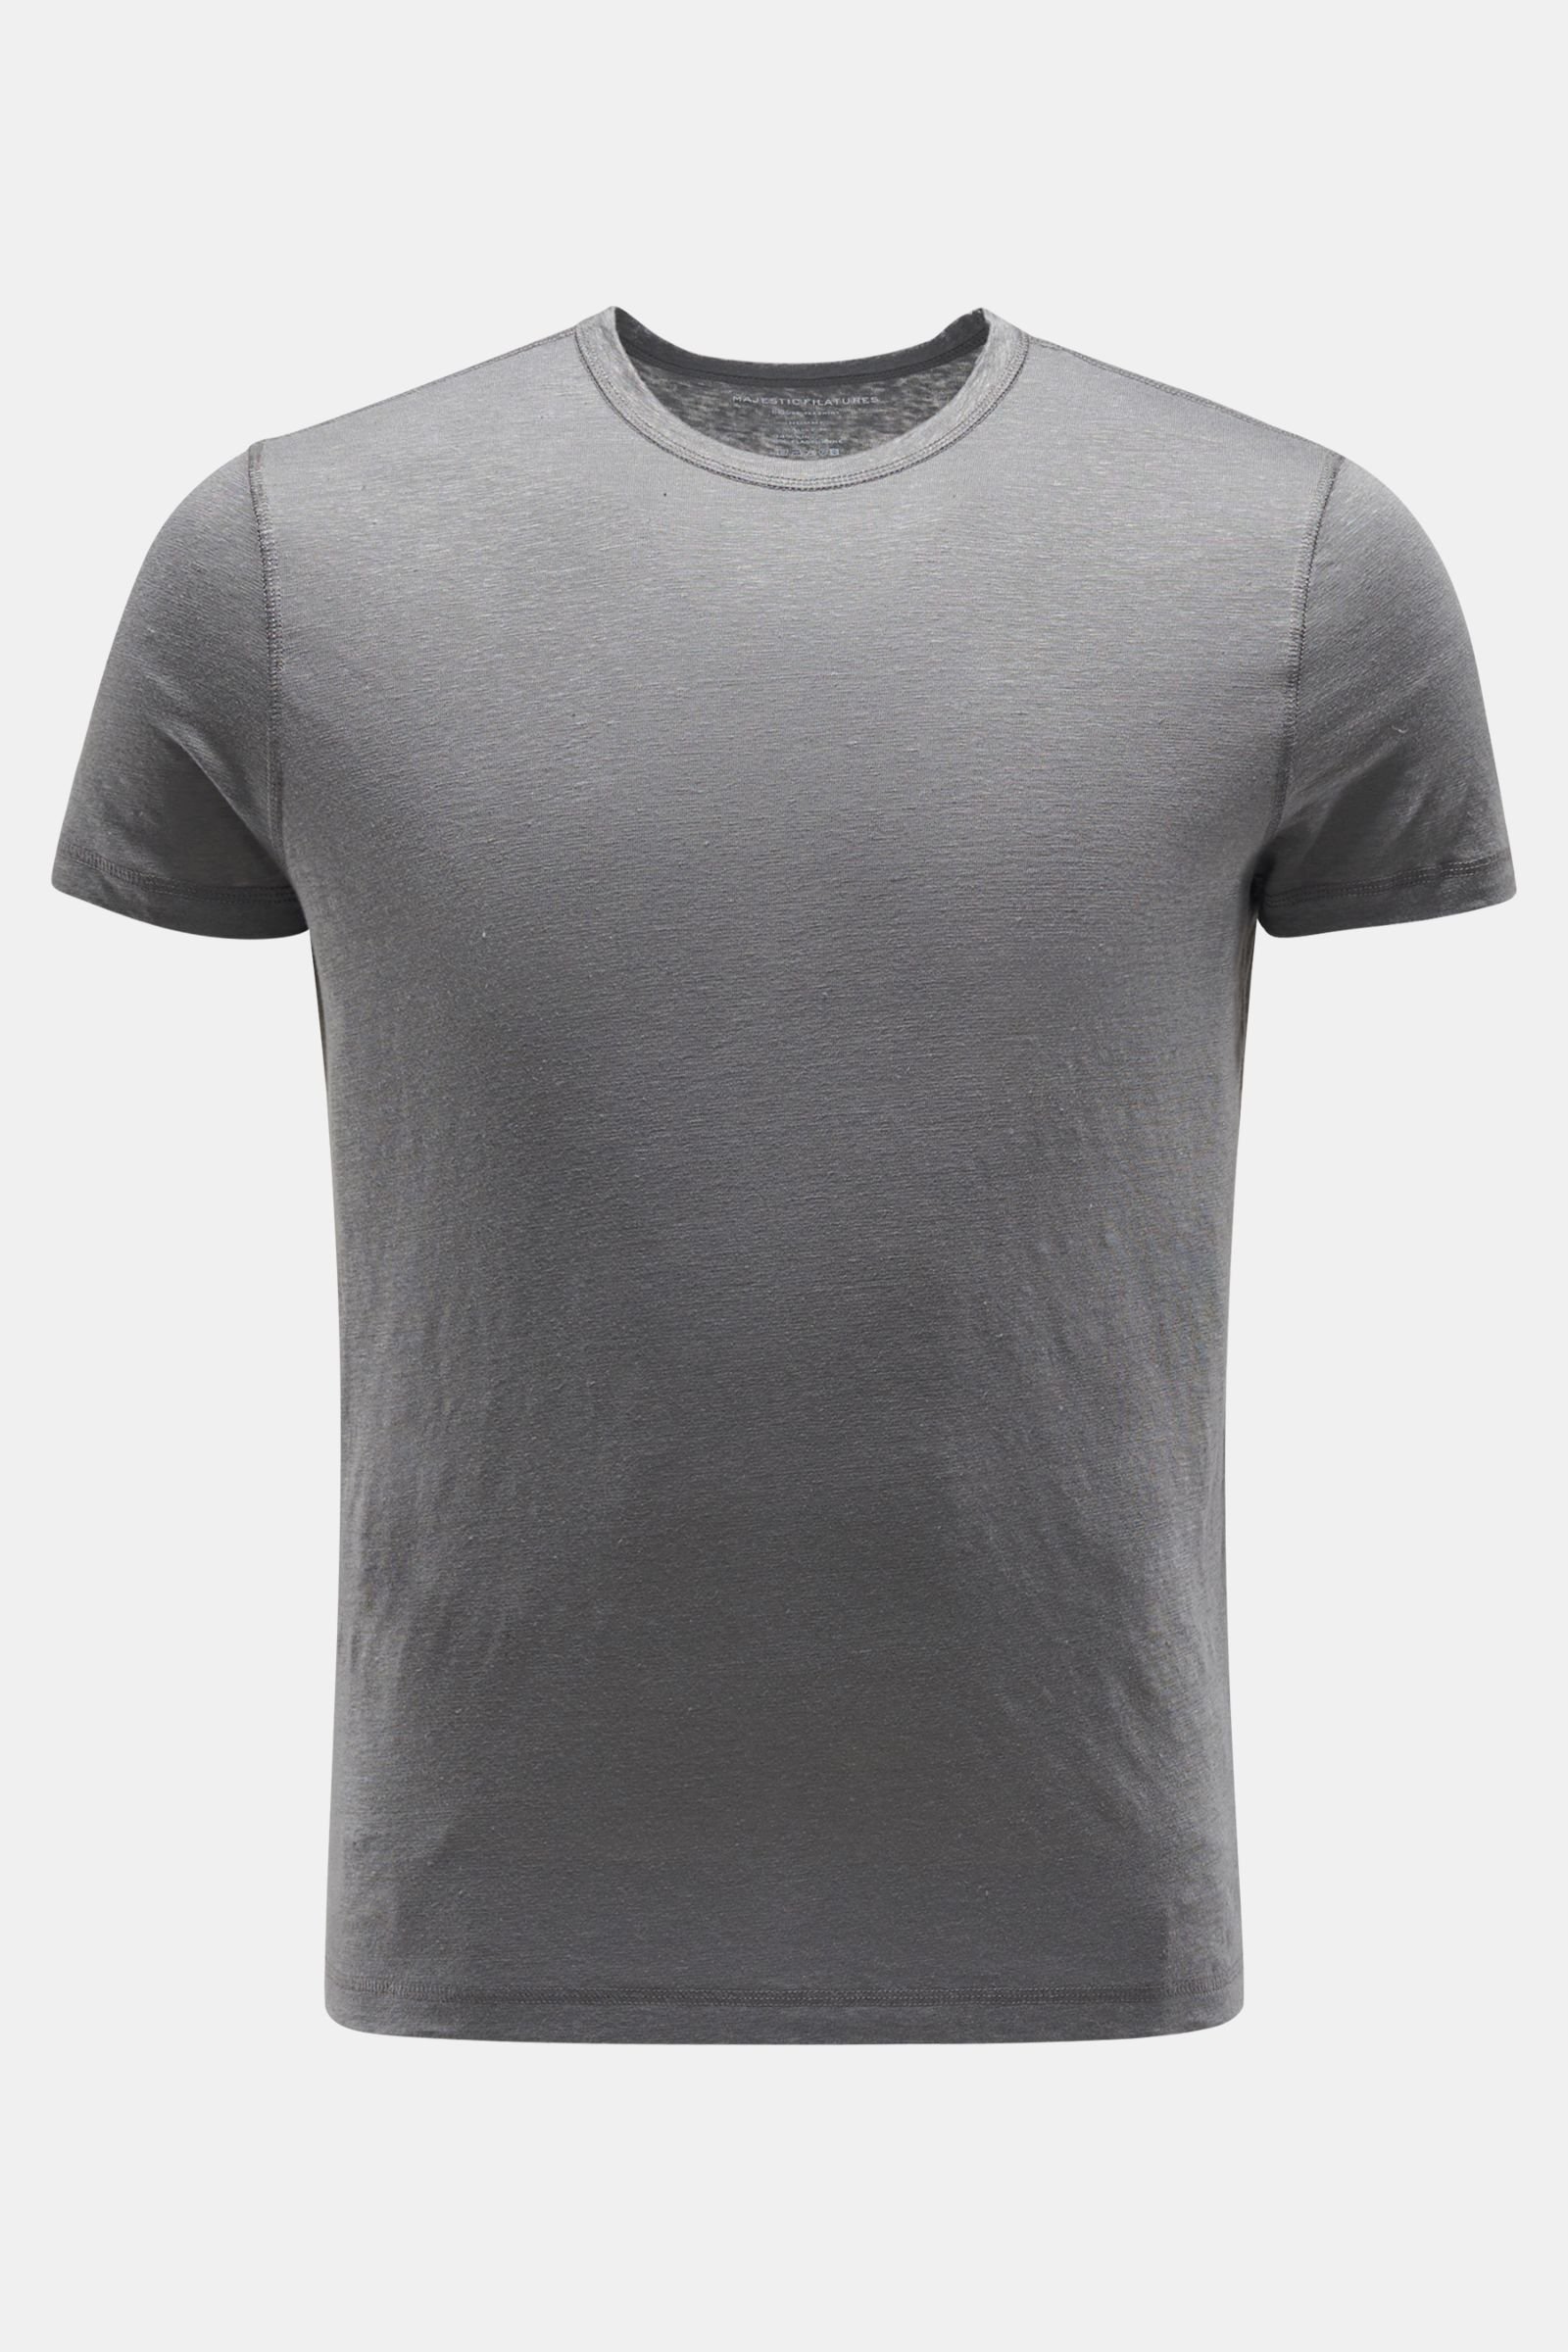 Linen crew neck T-shirt grey